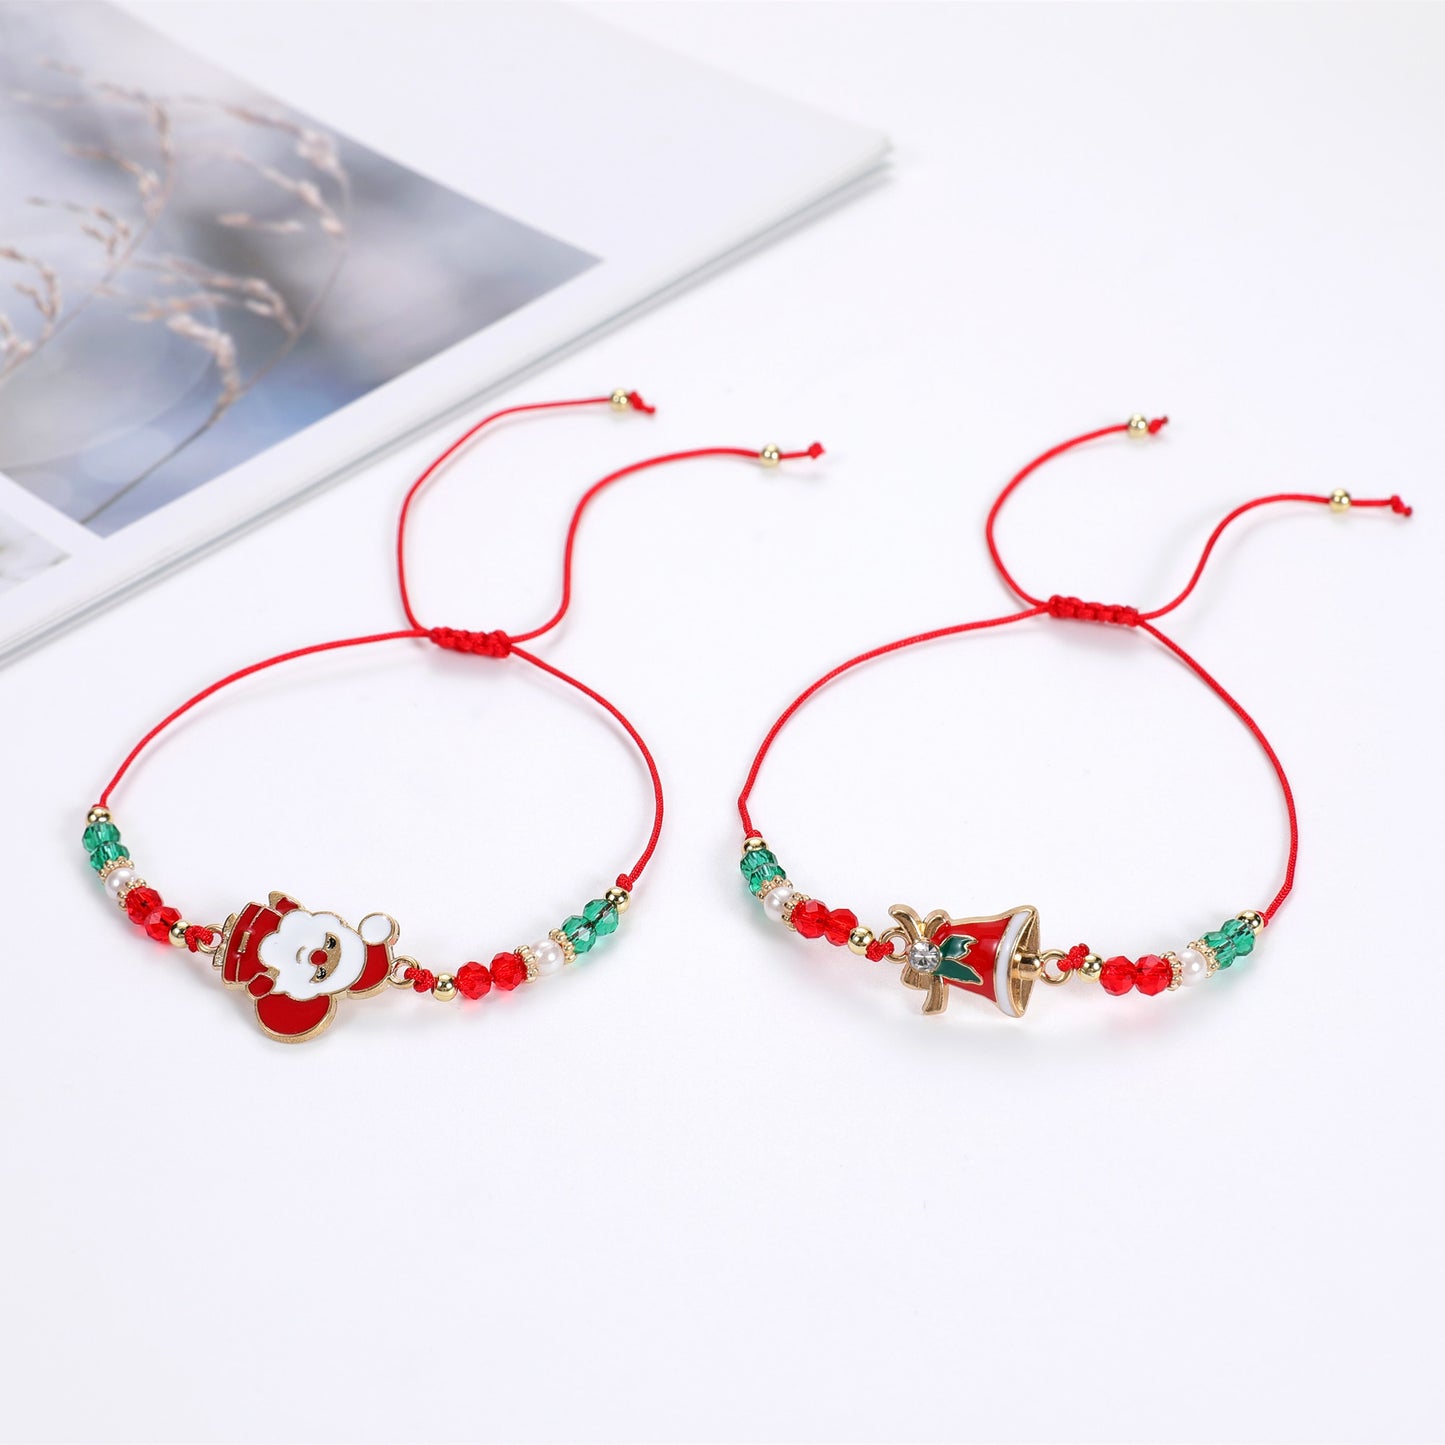 12pcs Festival Christmas Bracelets Imitation Pearl Santa Claus Xmas Tree Pendant Party Jewelry Gifts for Girls Kids Adult